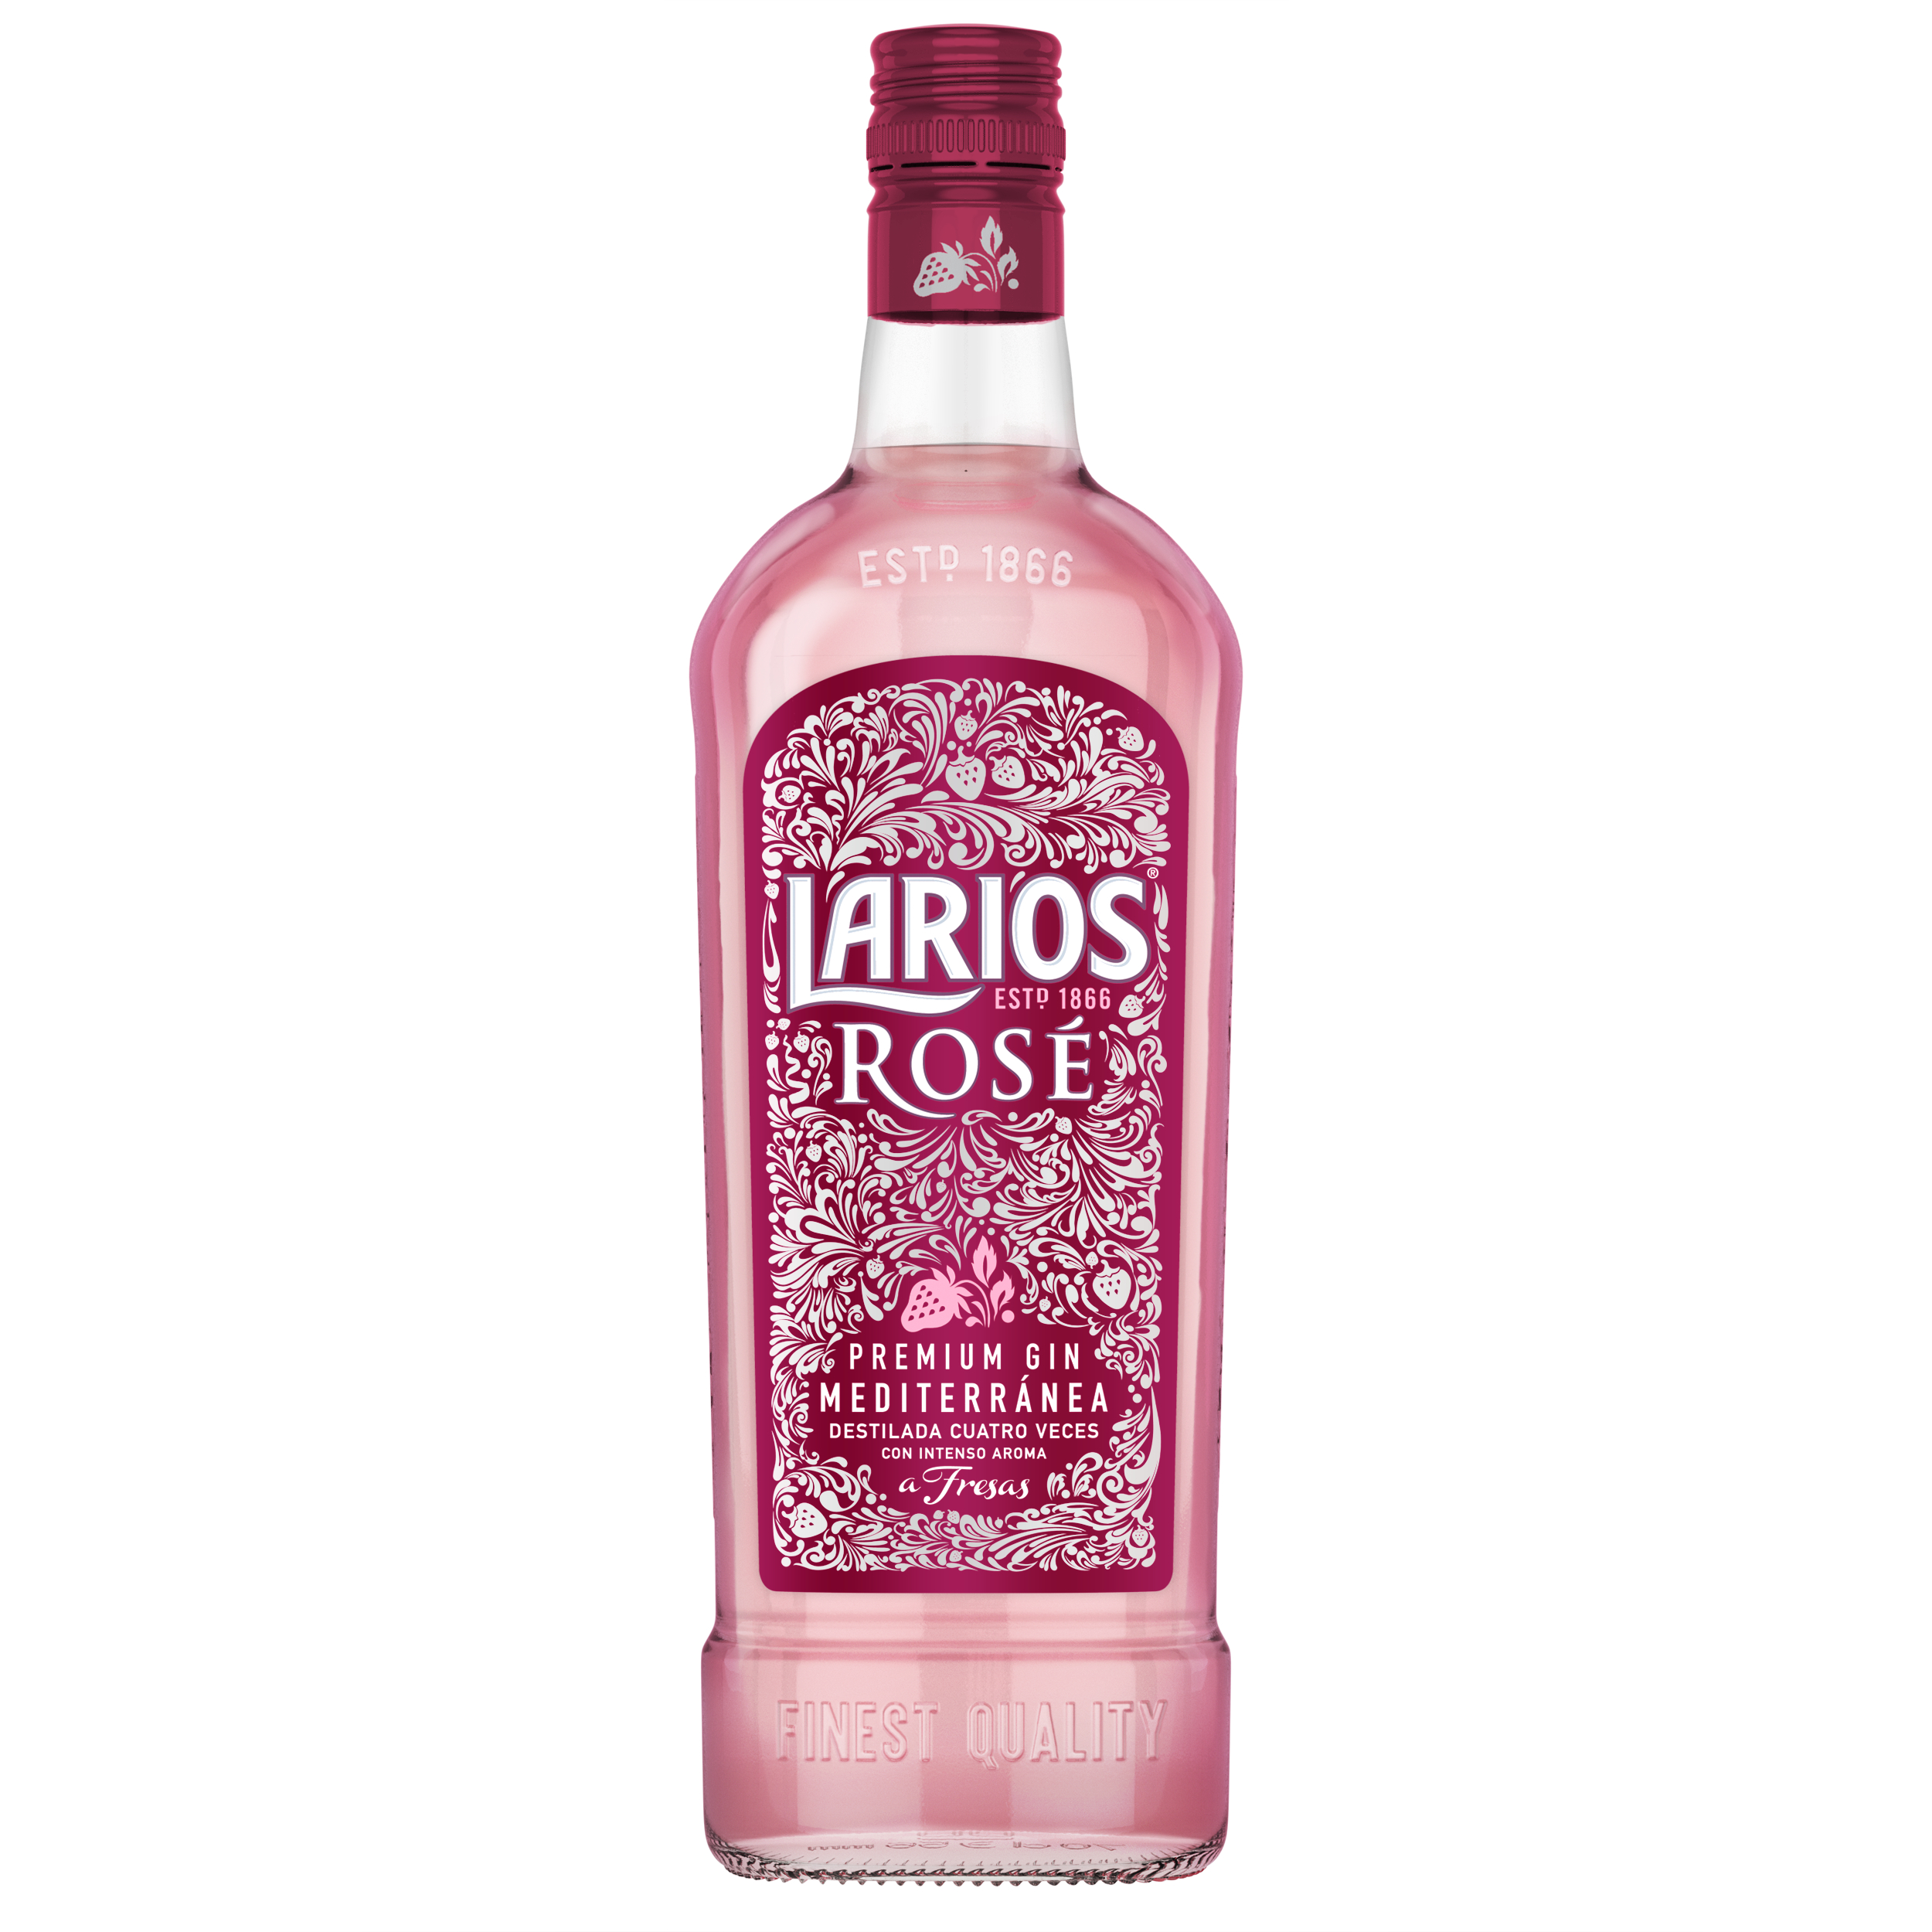 Джин Larios Rose Premium Gin, 37,5%, 0,7 л + бокал - фото 2